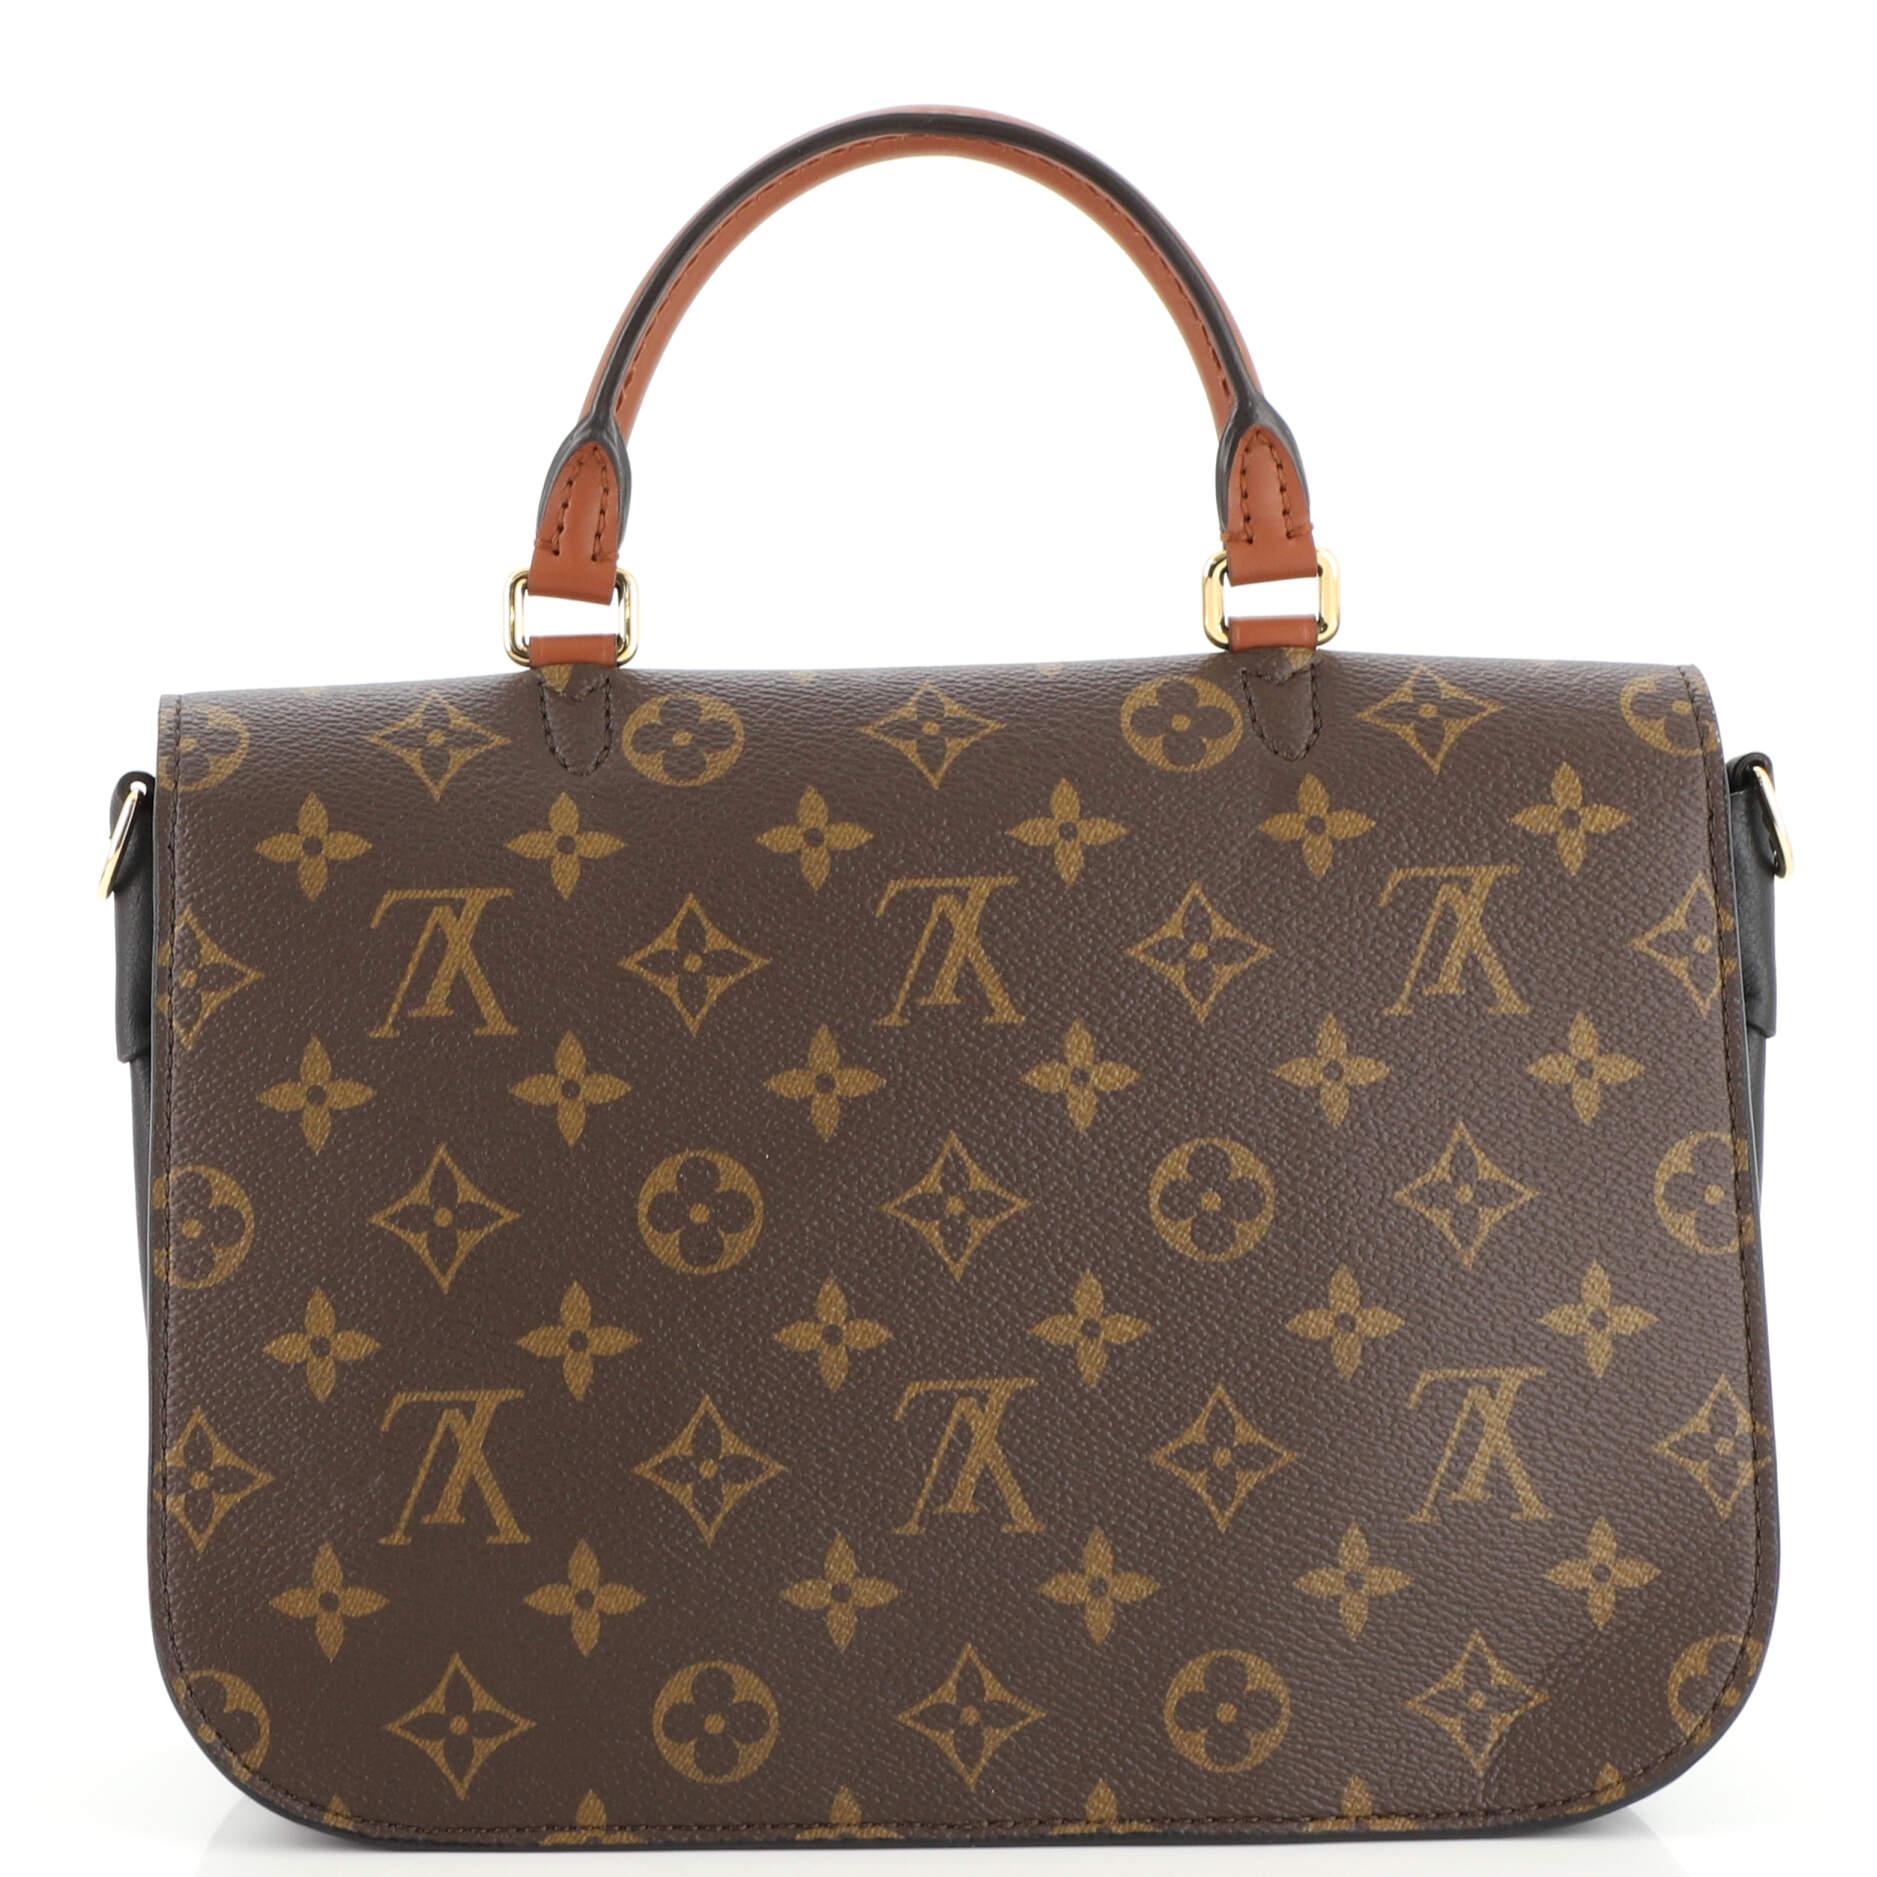 Black Louis Vuitton Vaugirard Handbag Monogram Canvas with Leather